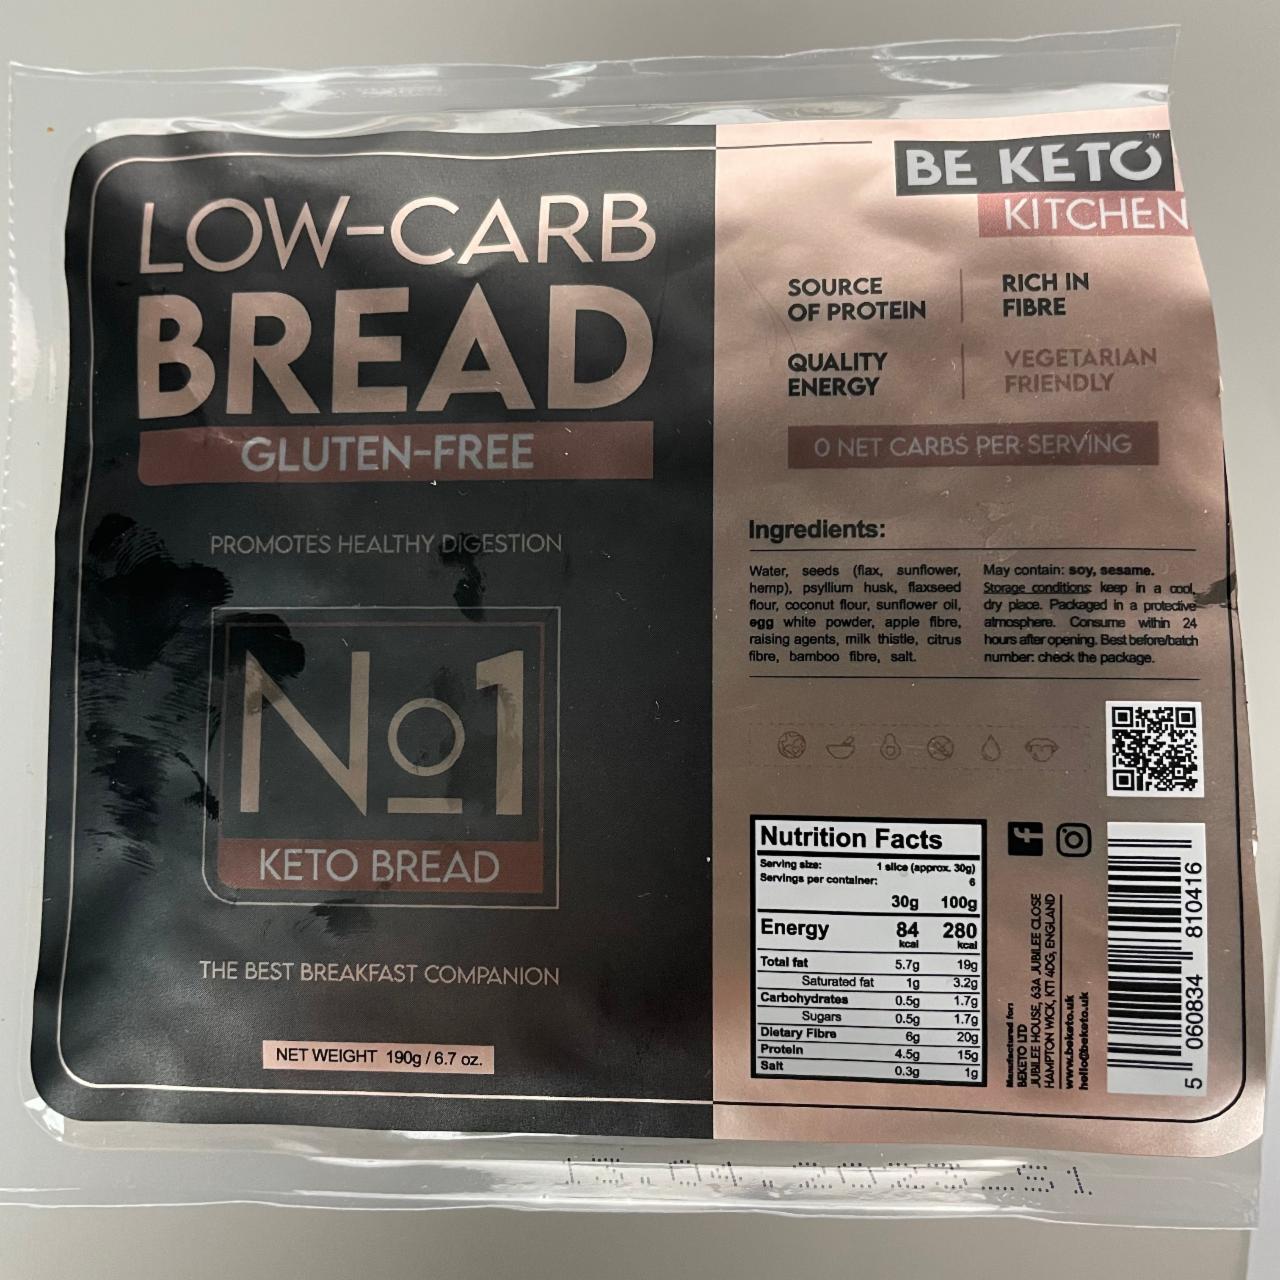 Fotografie - Low-carb bread gluten-free Be keto kitchen